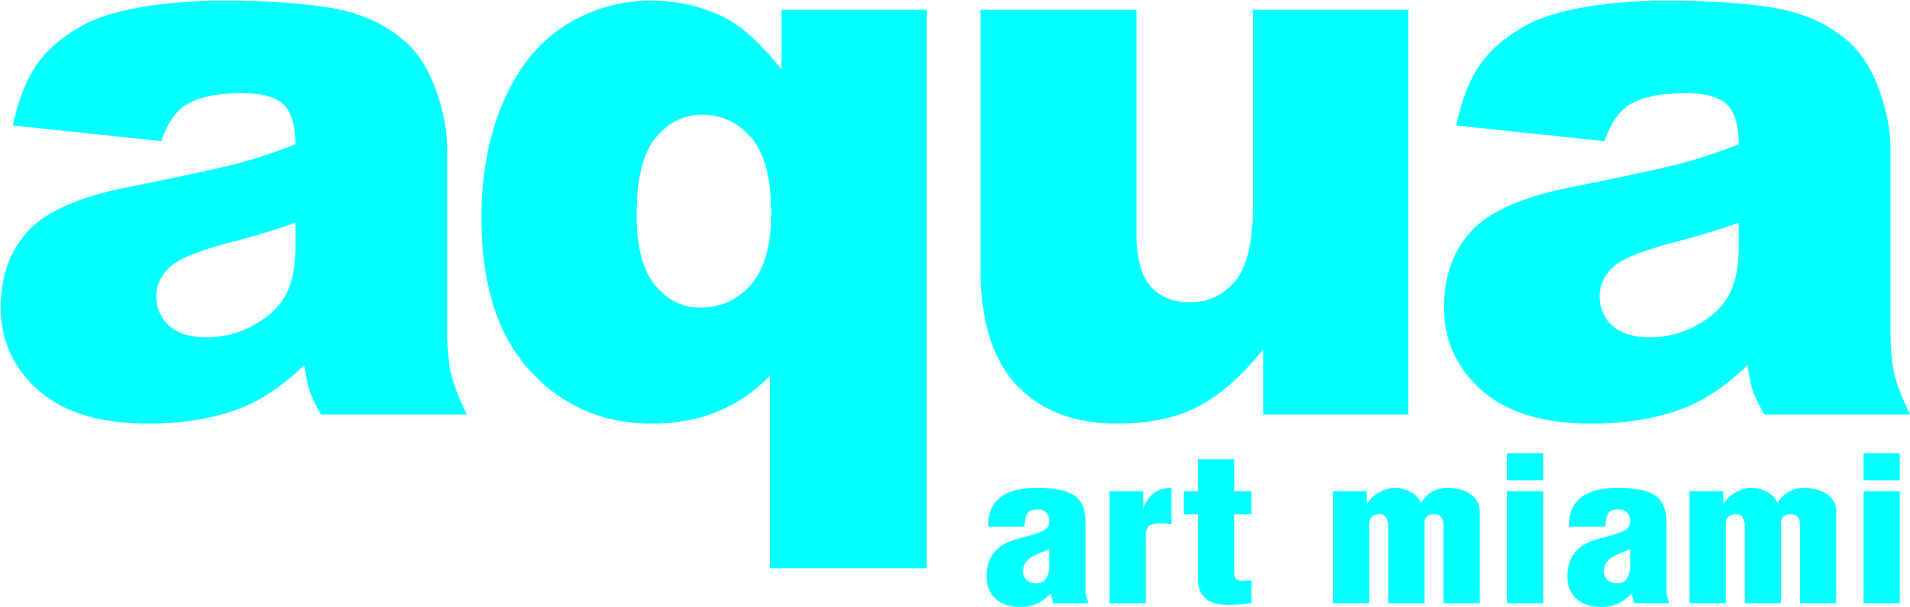 Miami.com Logo - Aqua Art Miami - Press Logos